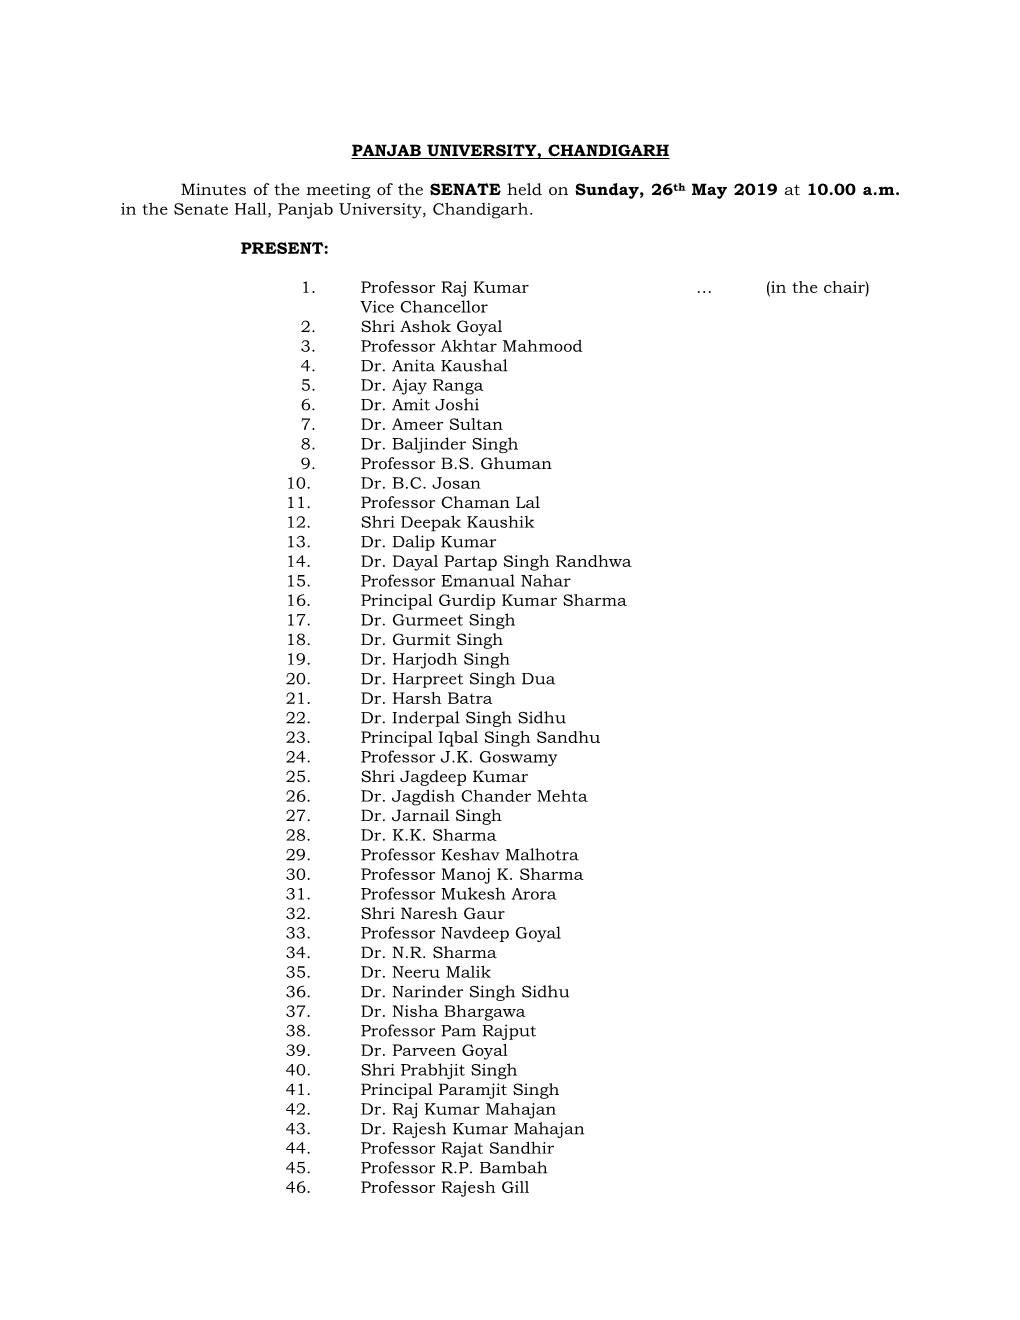 Senate Held on 26Th May 2019